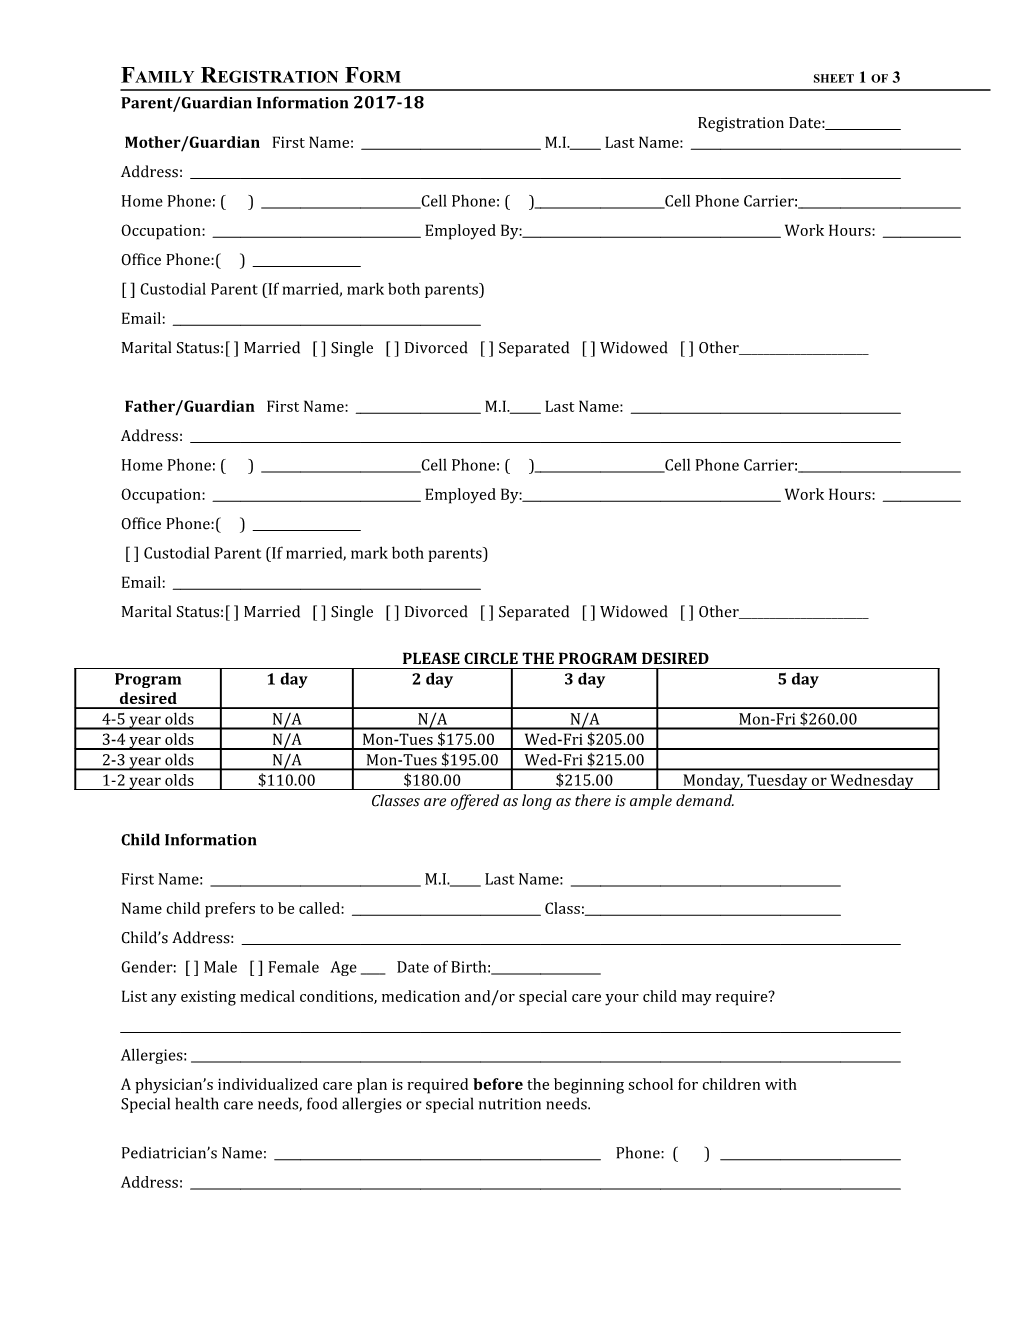 Family Registration Form Sheet 1 of 3